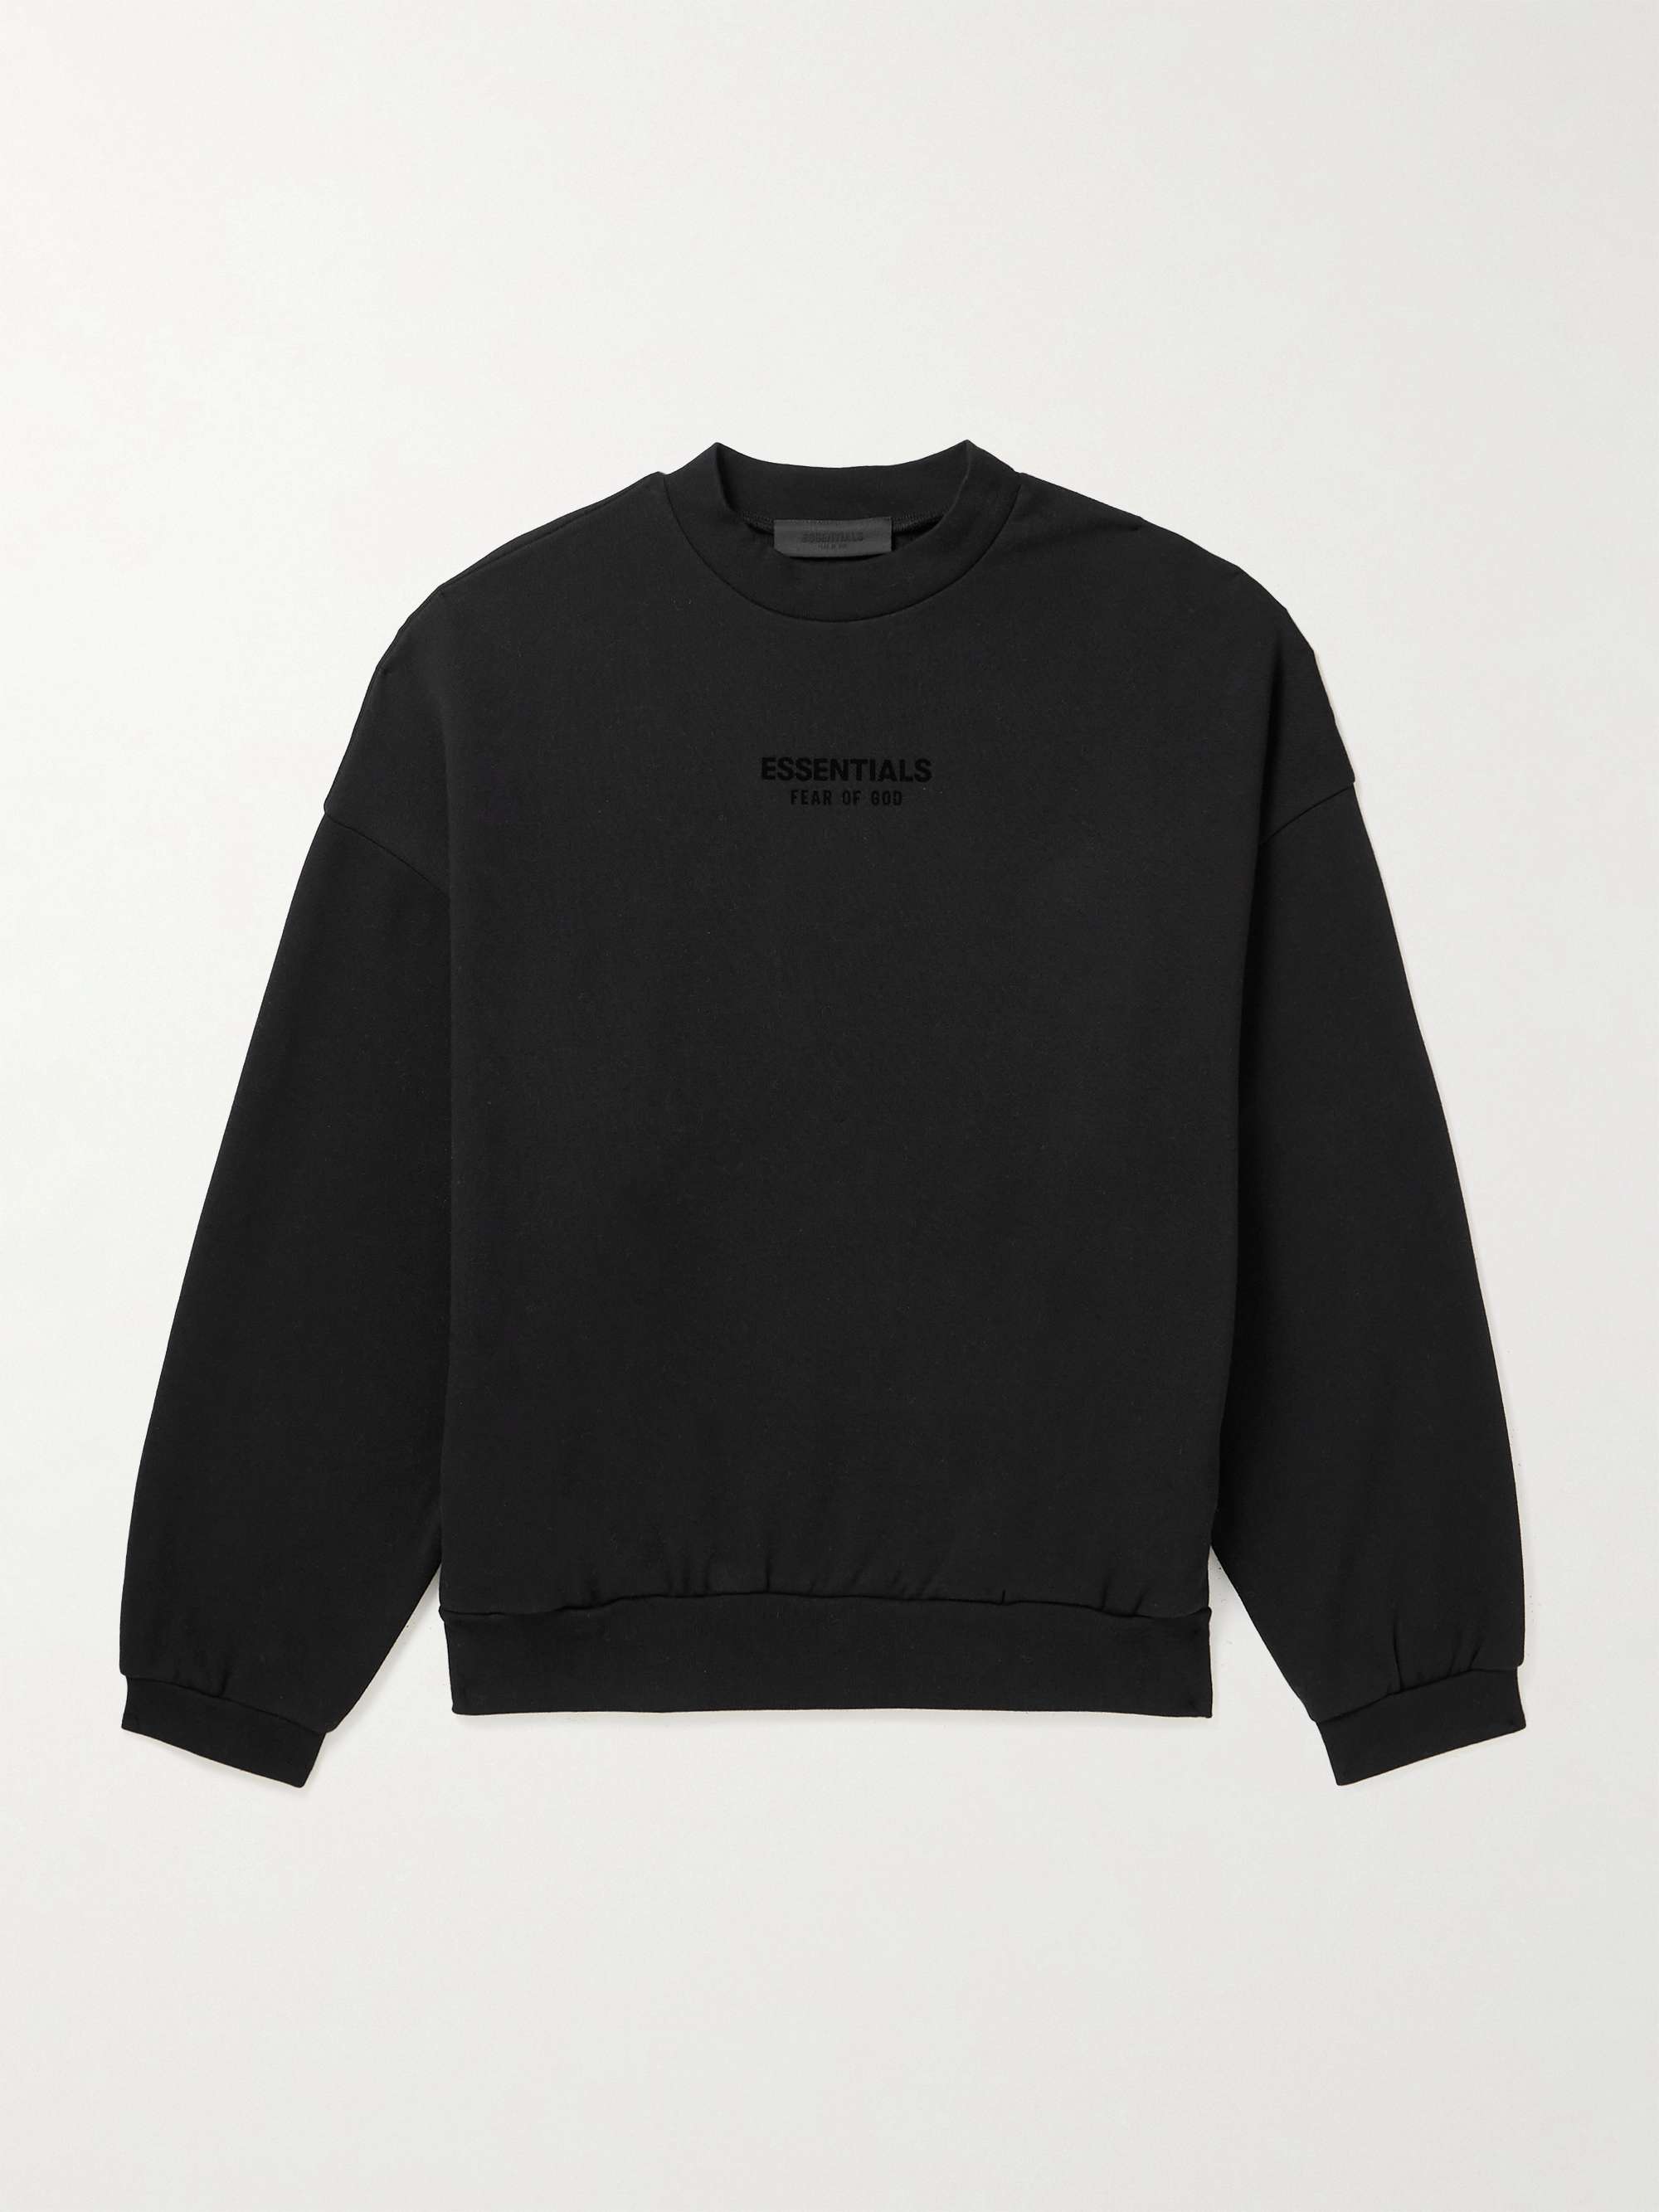 Logo-Appliquéd Cotton-Blend Jersey Sweatshirt